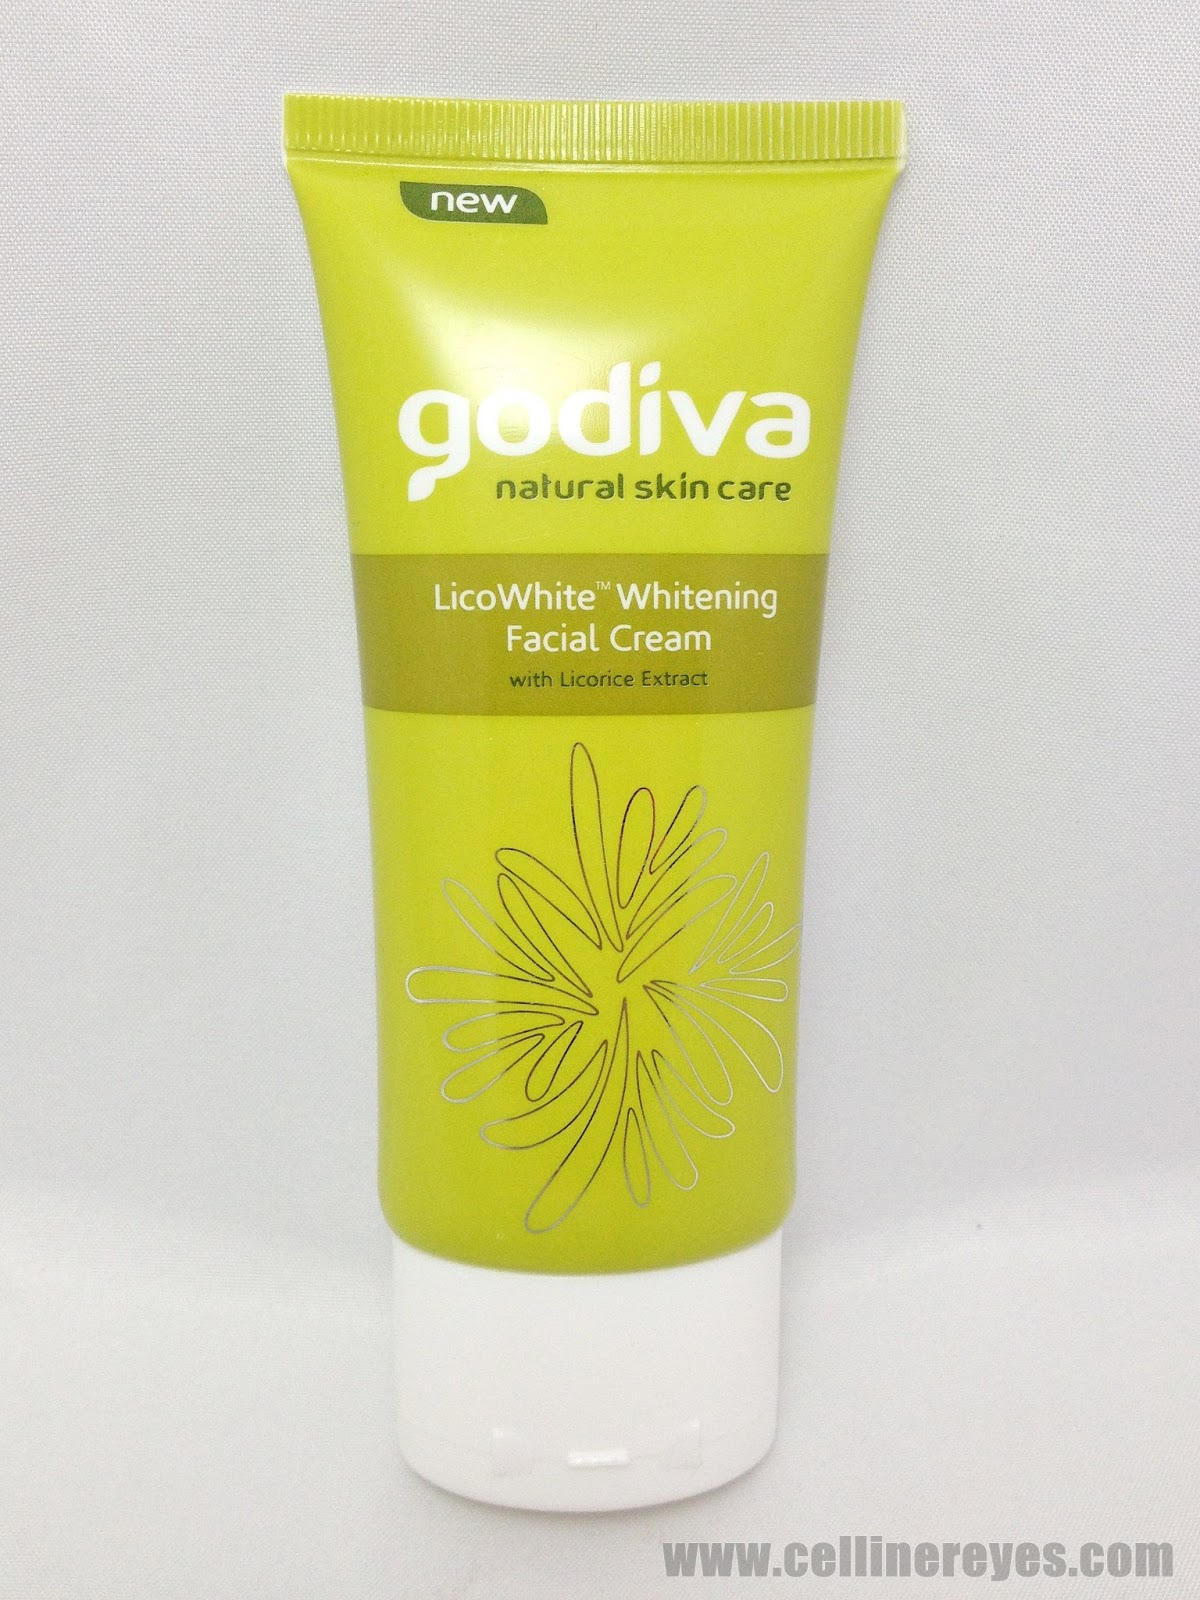 Review: Godiva LicoWhite Whitening Facial Cream â€